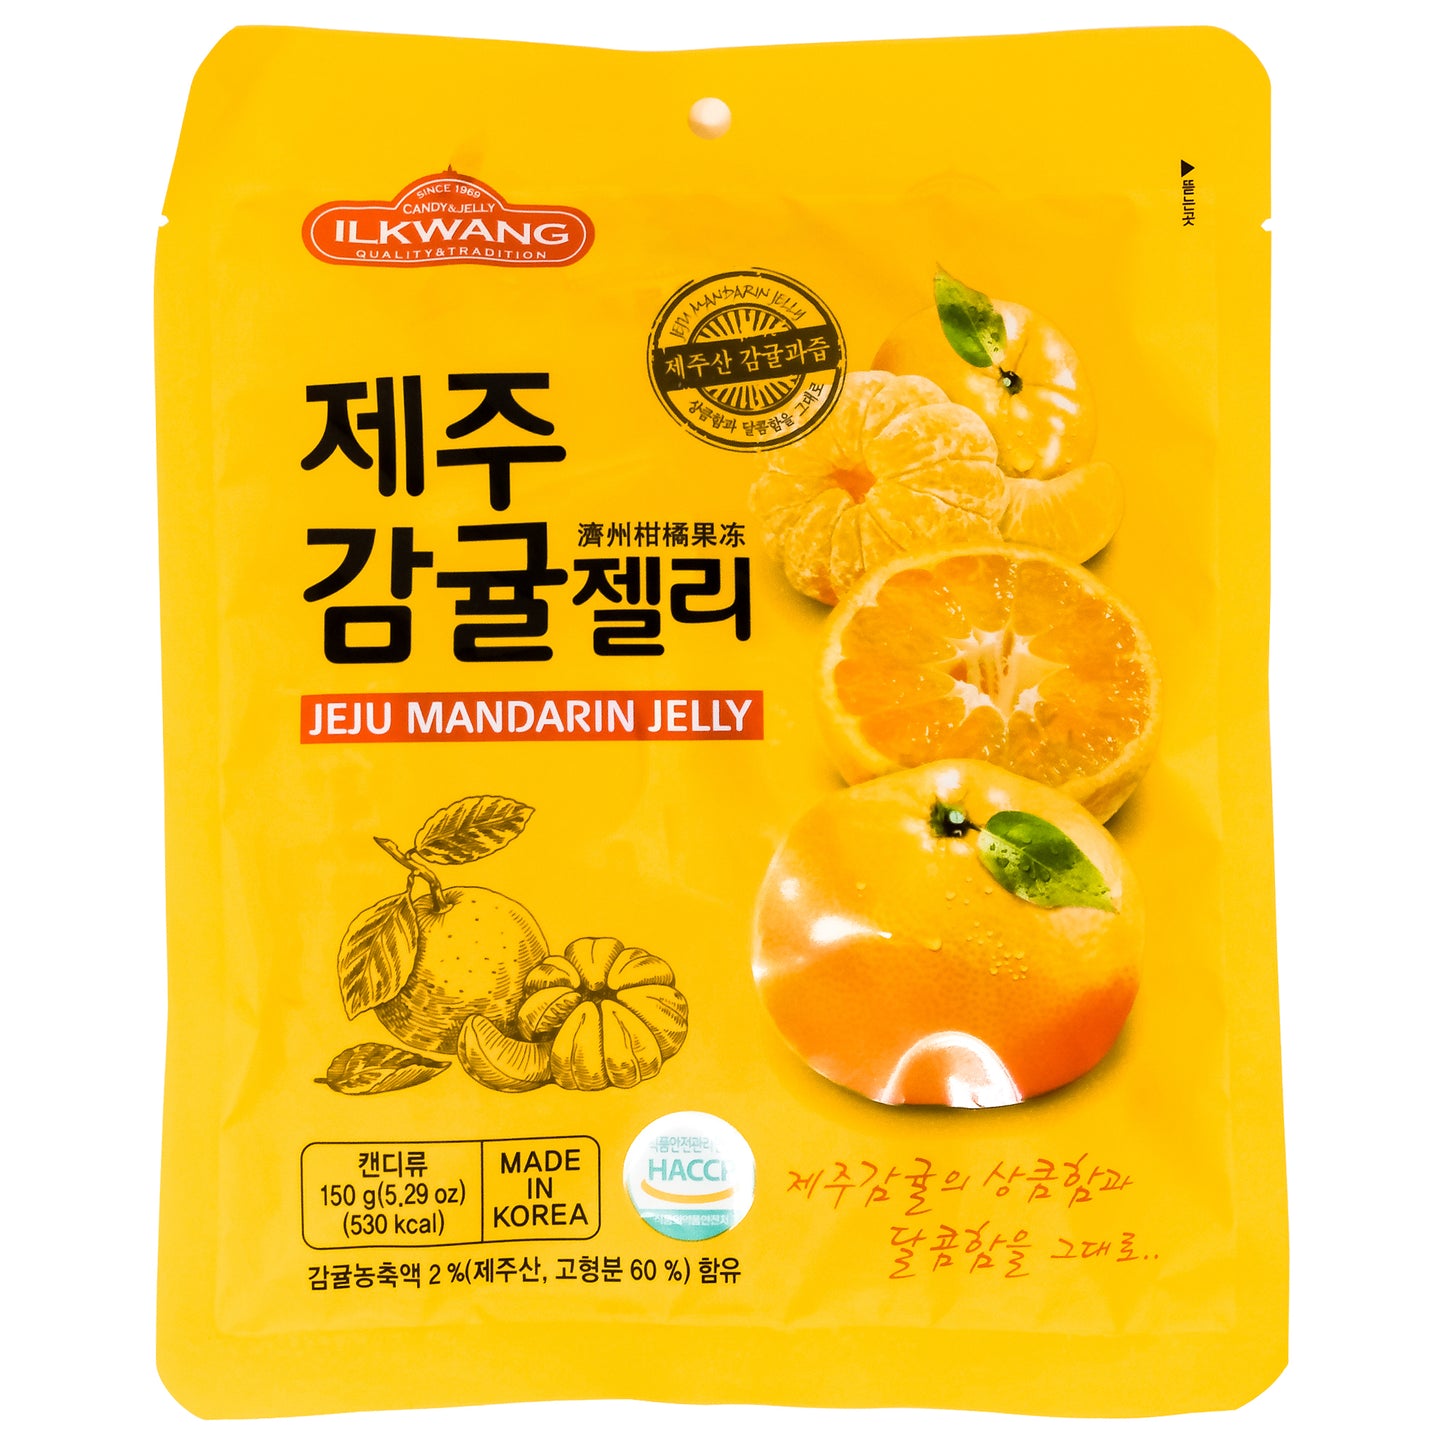 KOREA  Jeju Mandarin Jelly Candy 9.87 oz /280g (Ilkwang) x2, 3, 4, 5